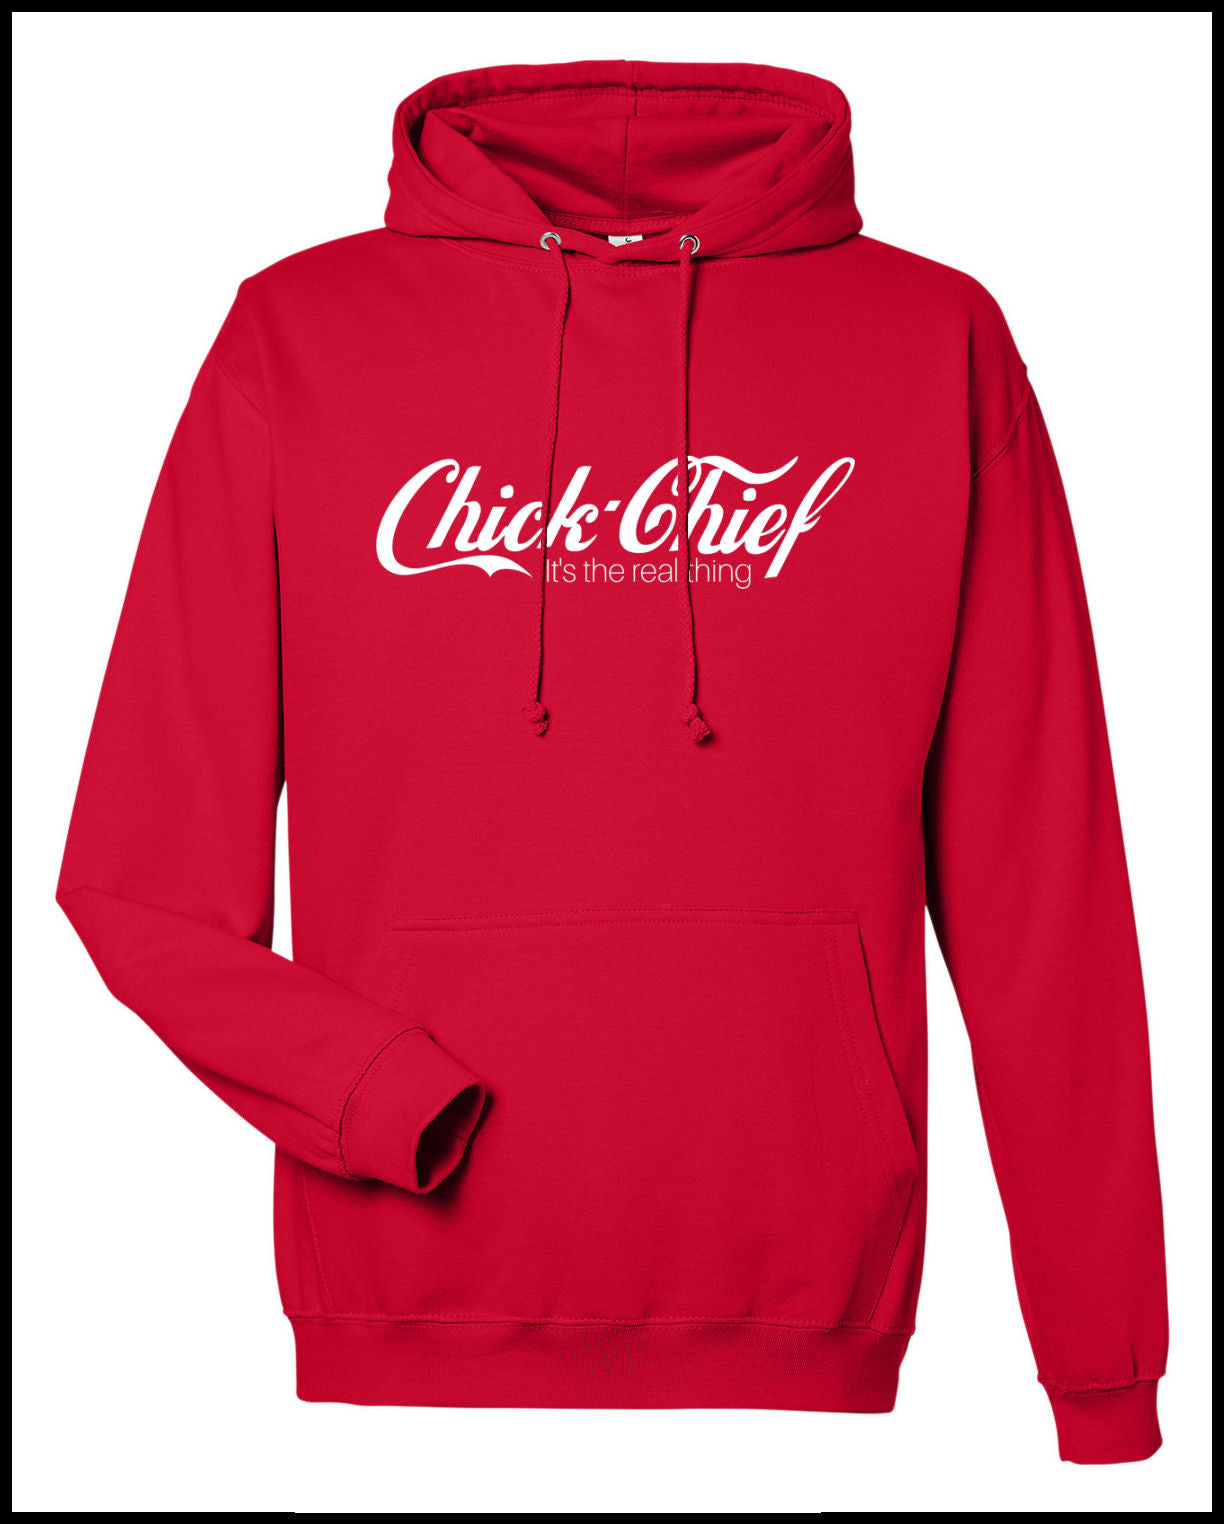 Chick Chief Red & White Hooded Sweatshirt